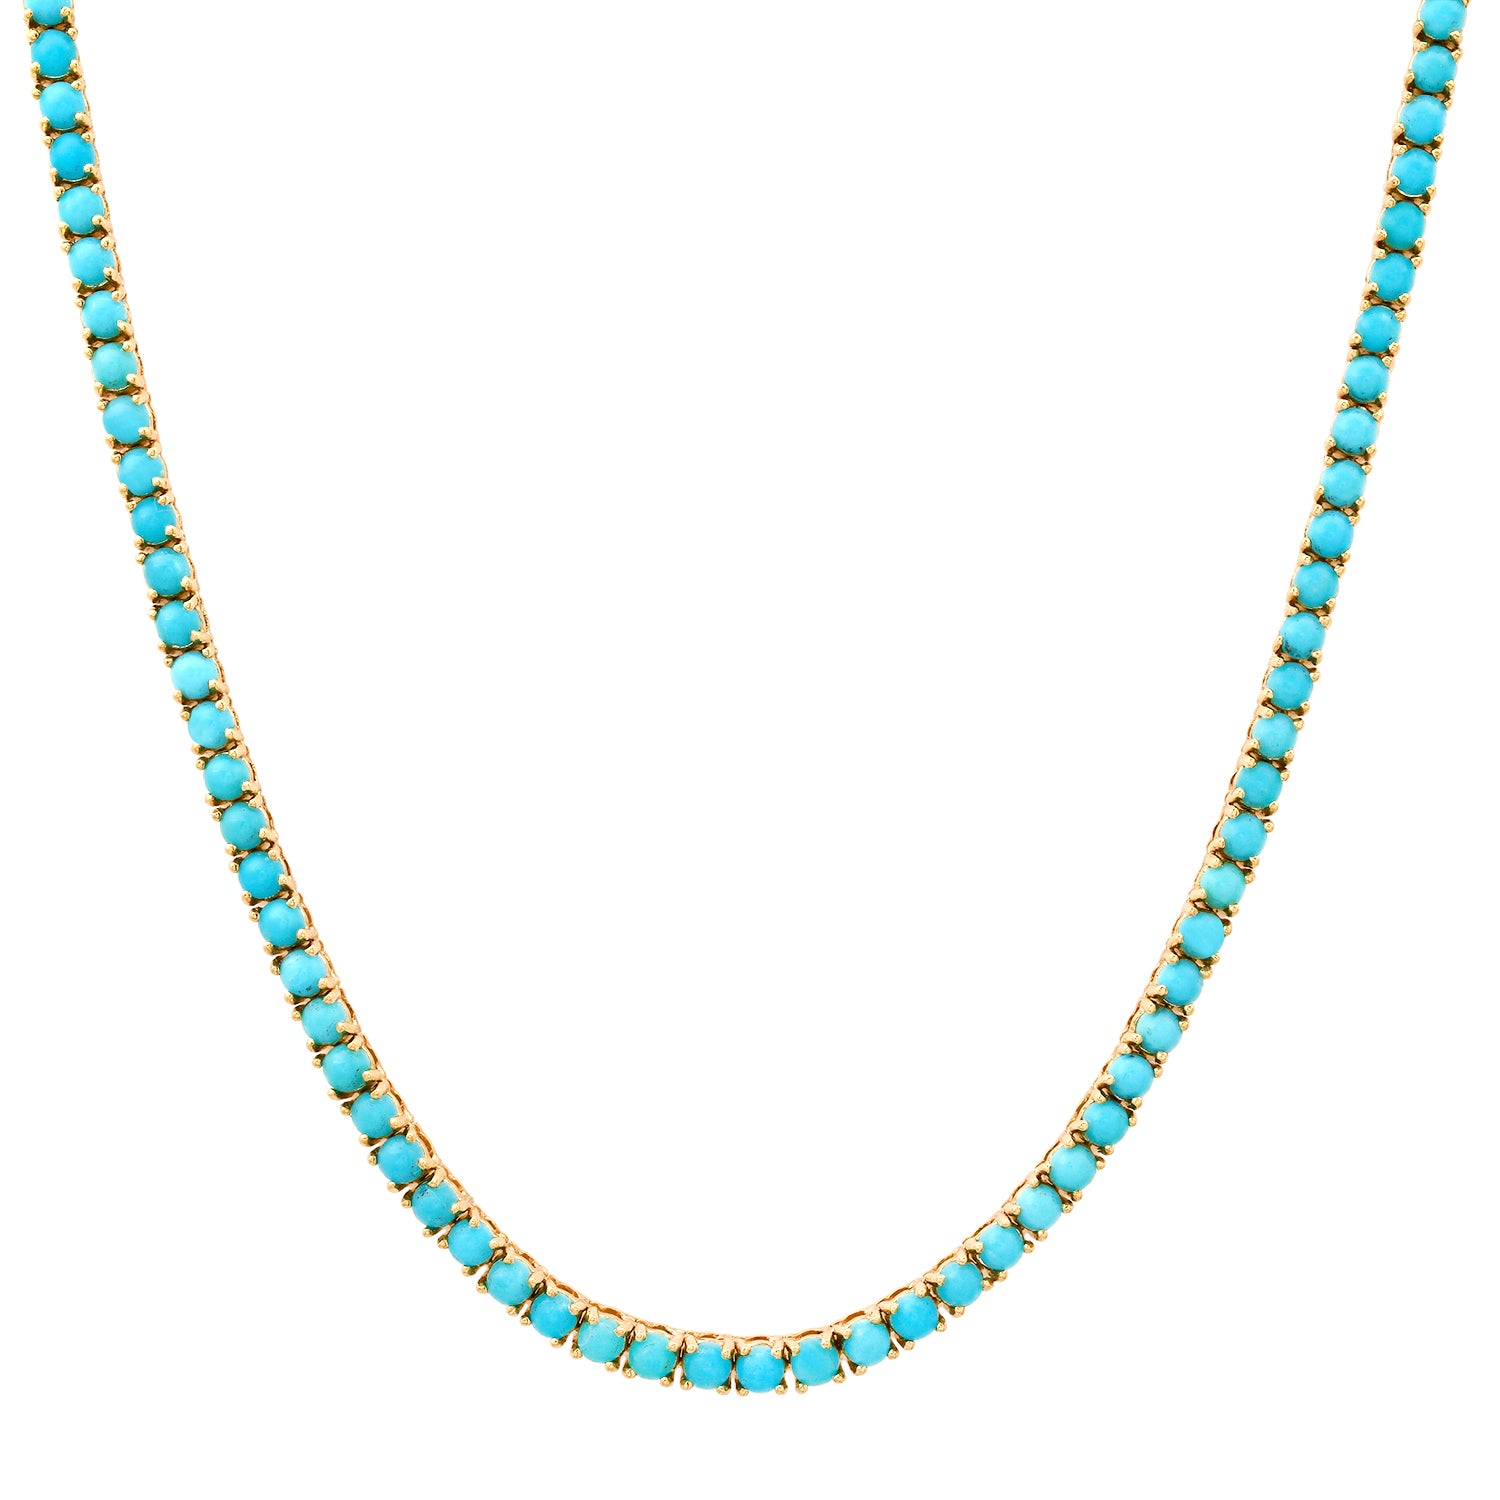 Medium Full Length Turquoise Tennis Necklace